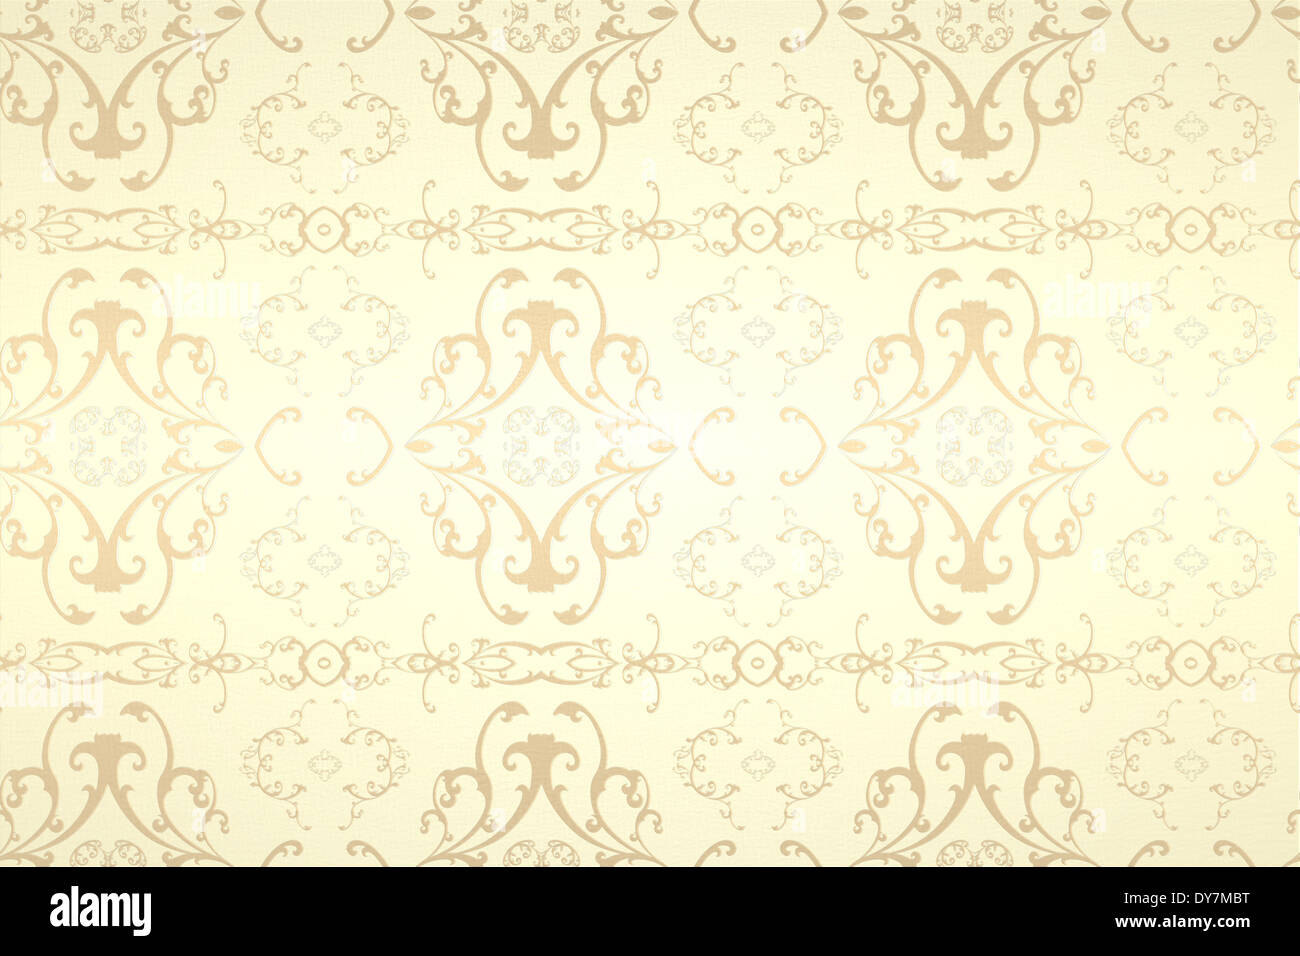 Elegant patterned wallpaper in cream tones Stock Photo